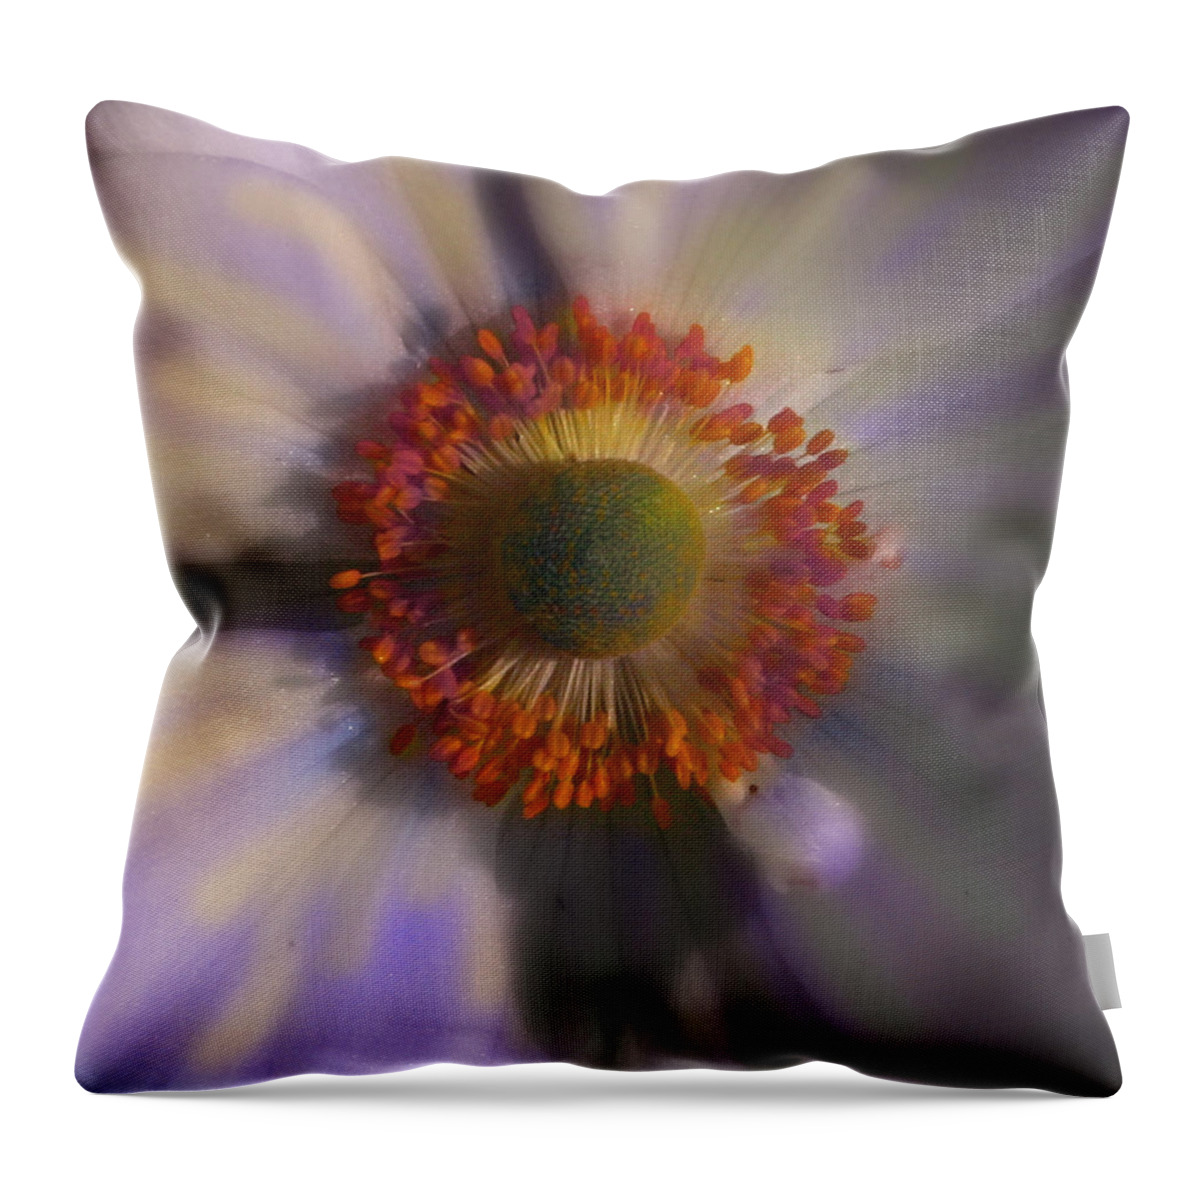 Flower Throw Pillow featuring the photograph Dazie Eye by Joseph G Holland